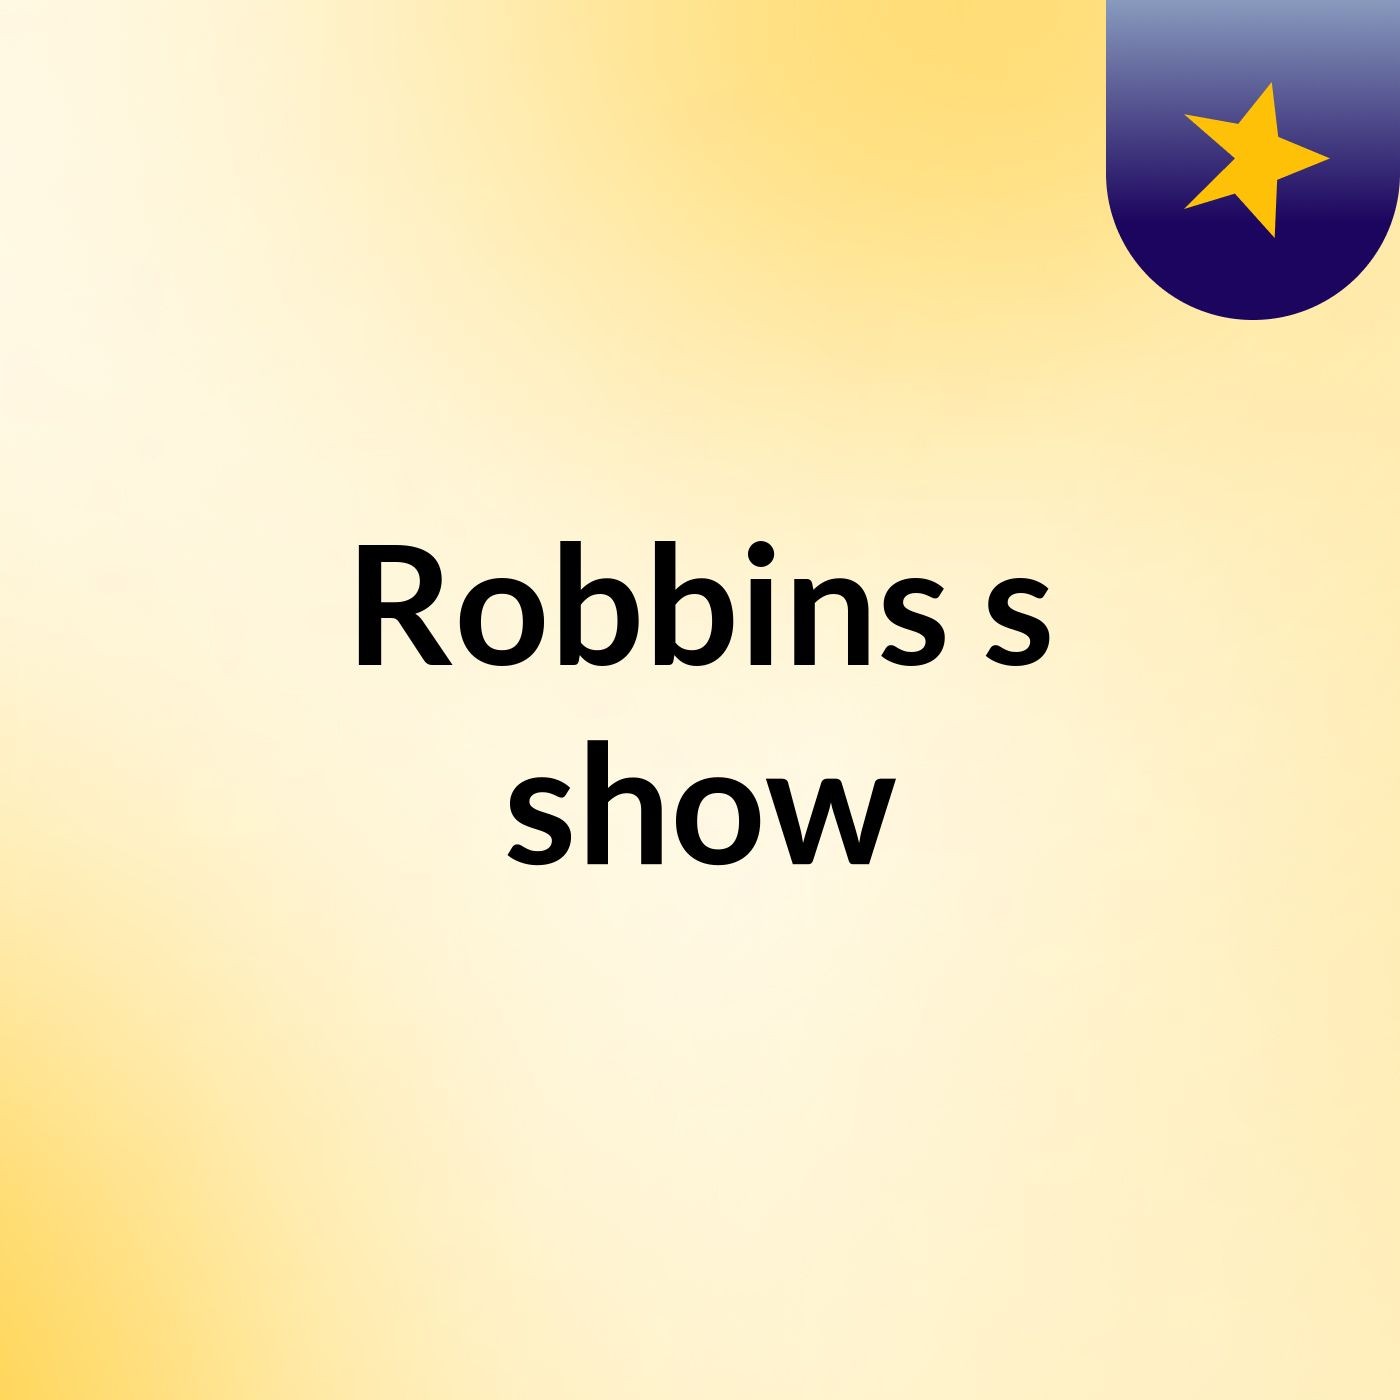 Robbins's show